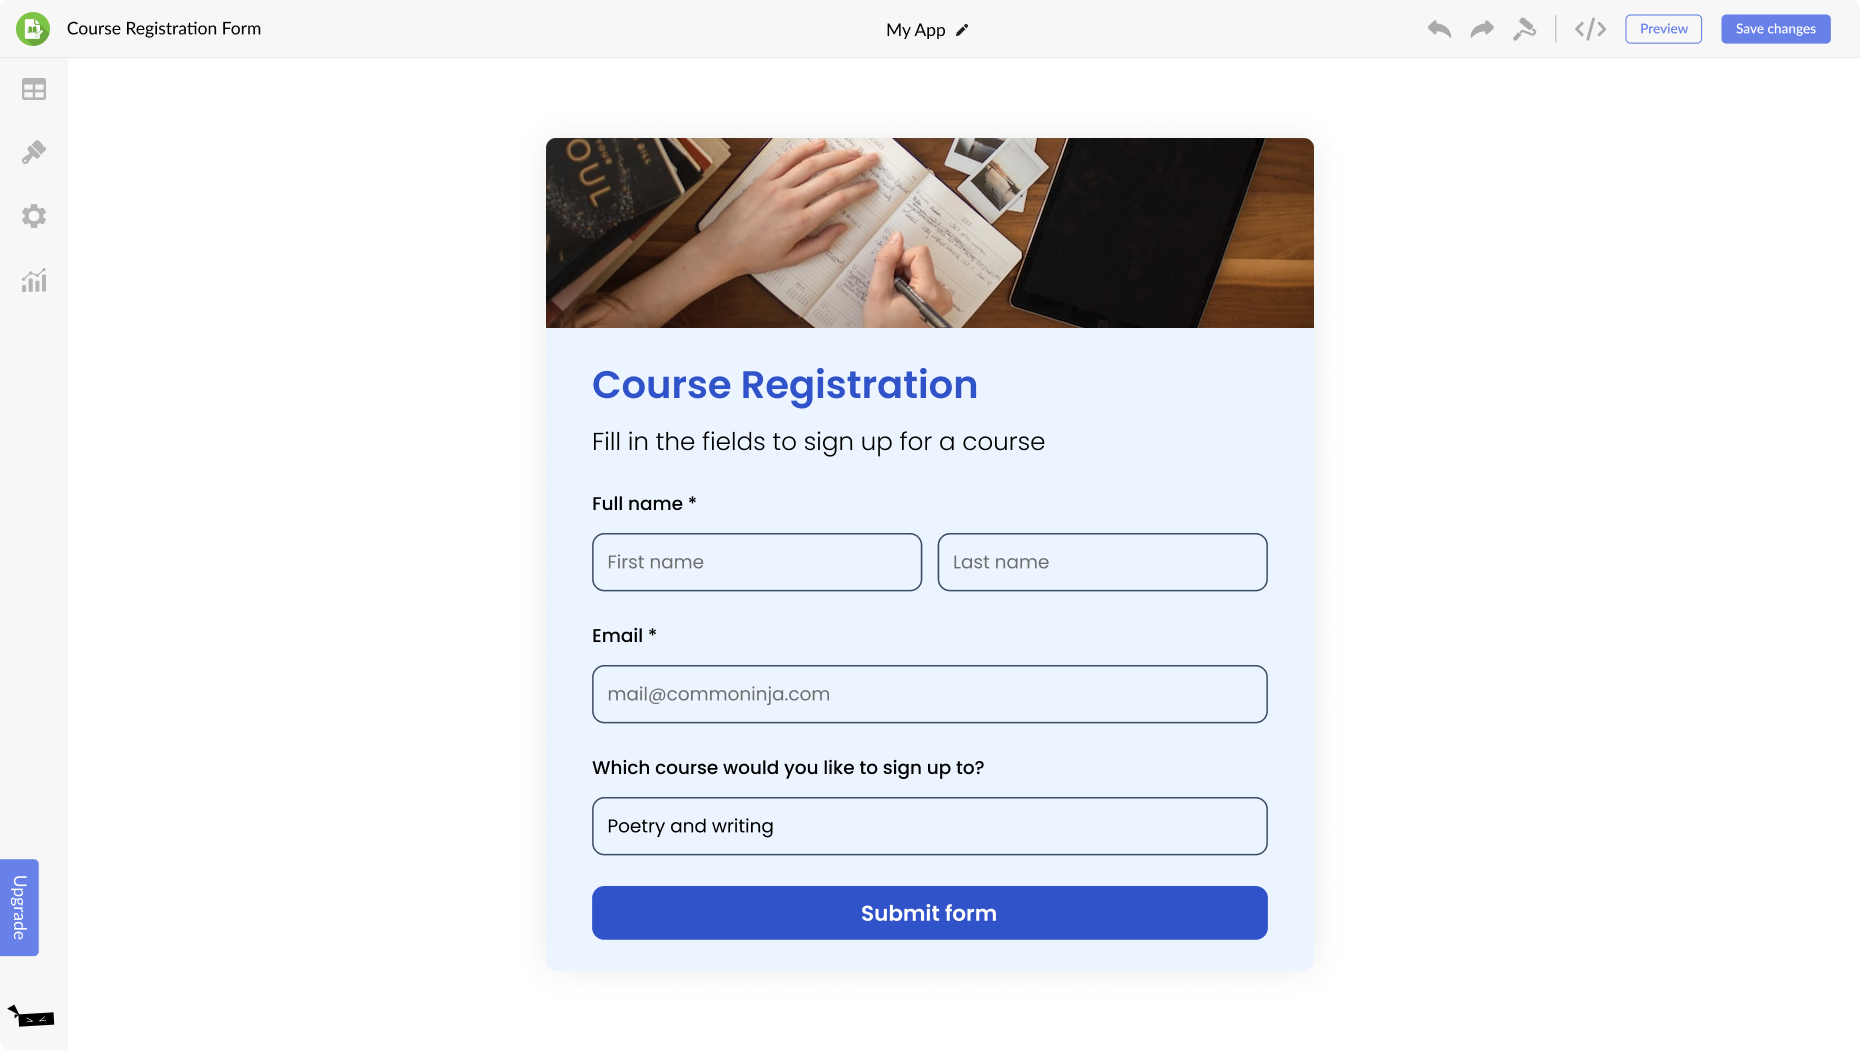 Course Registration Form for Shift4Shop